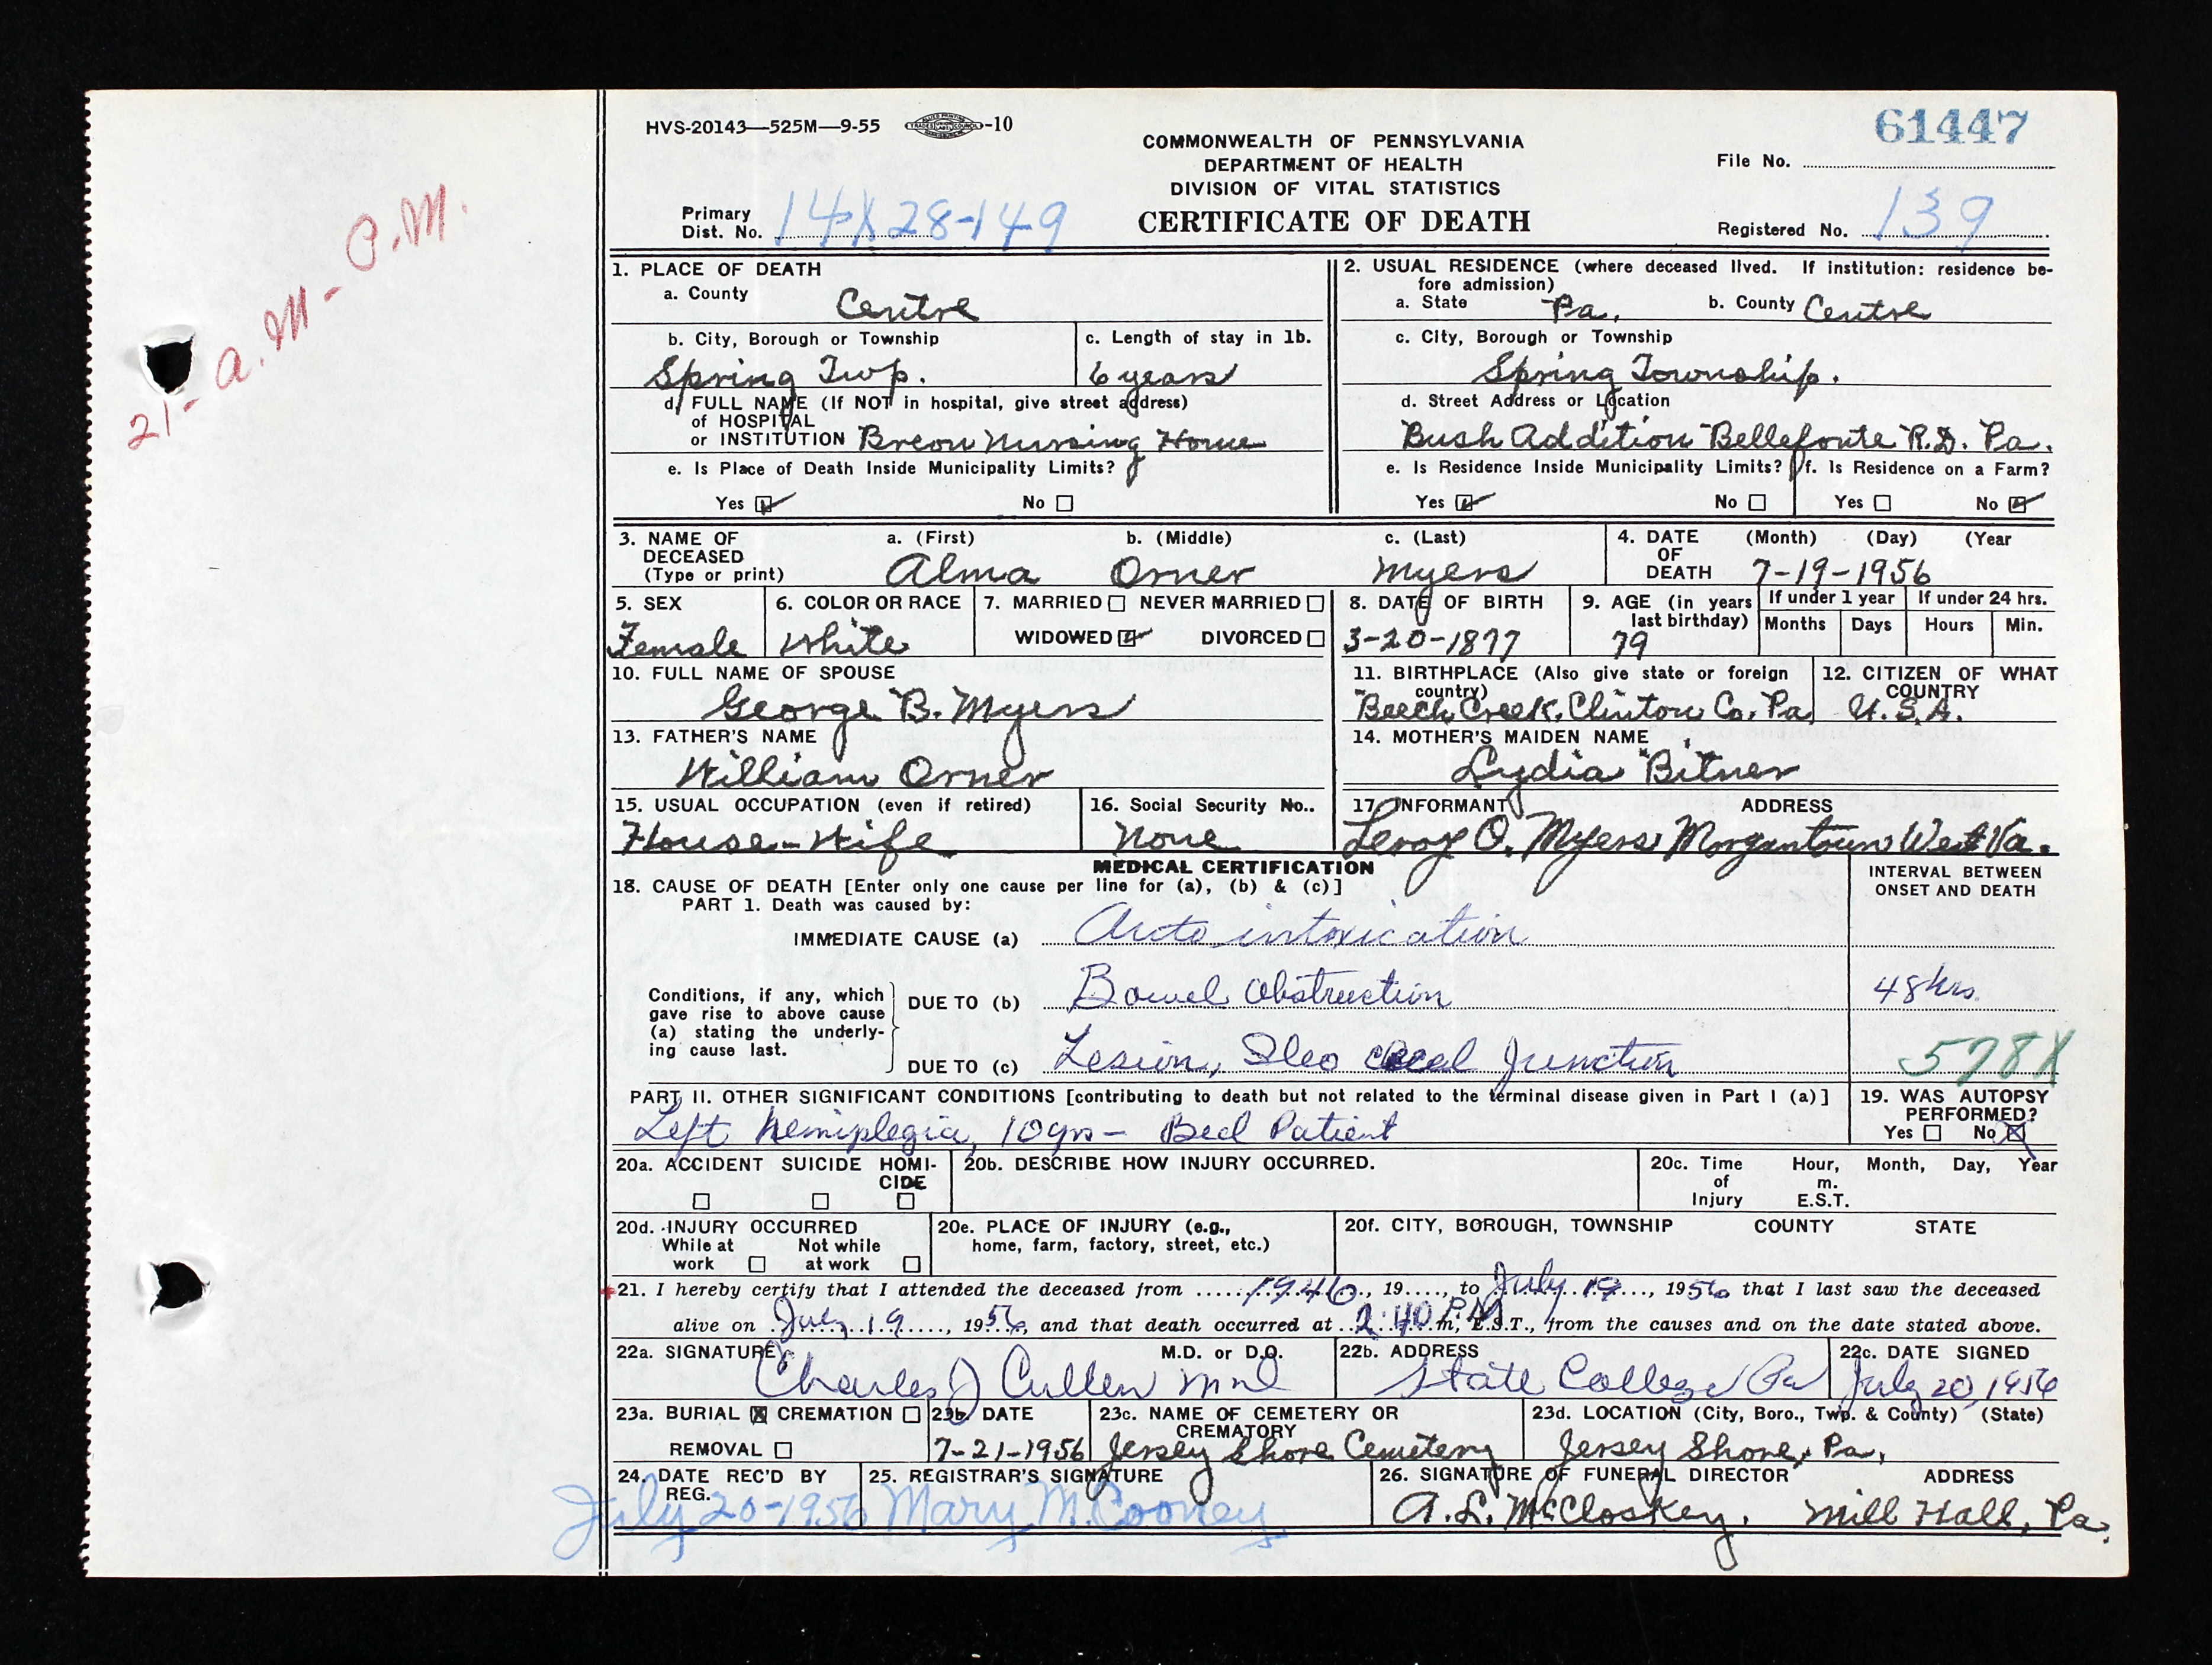 Alma S. Orner Myers death certificate